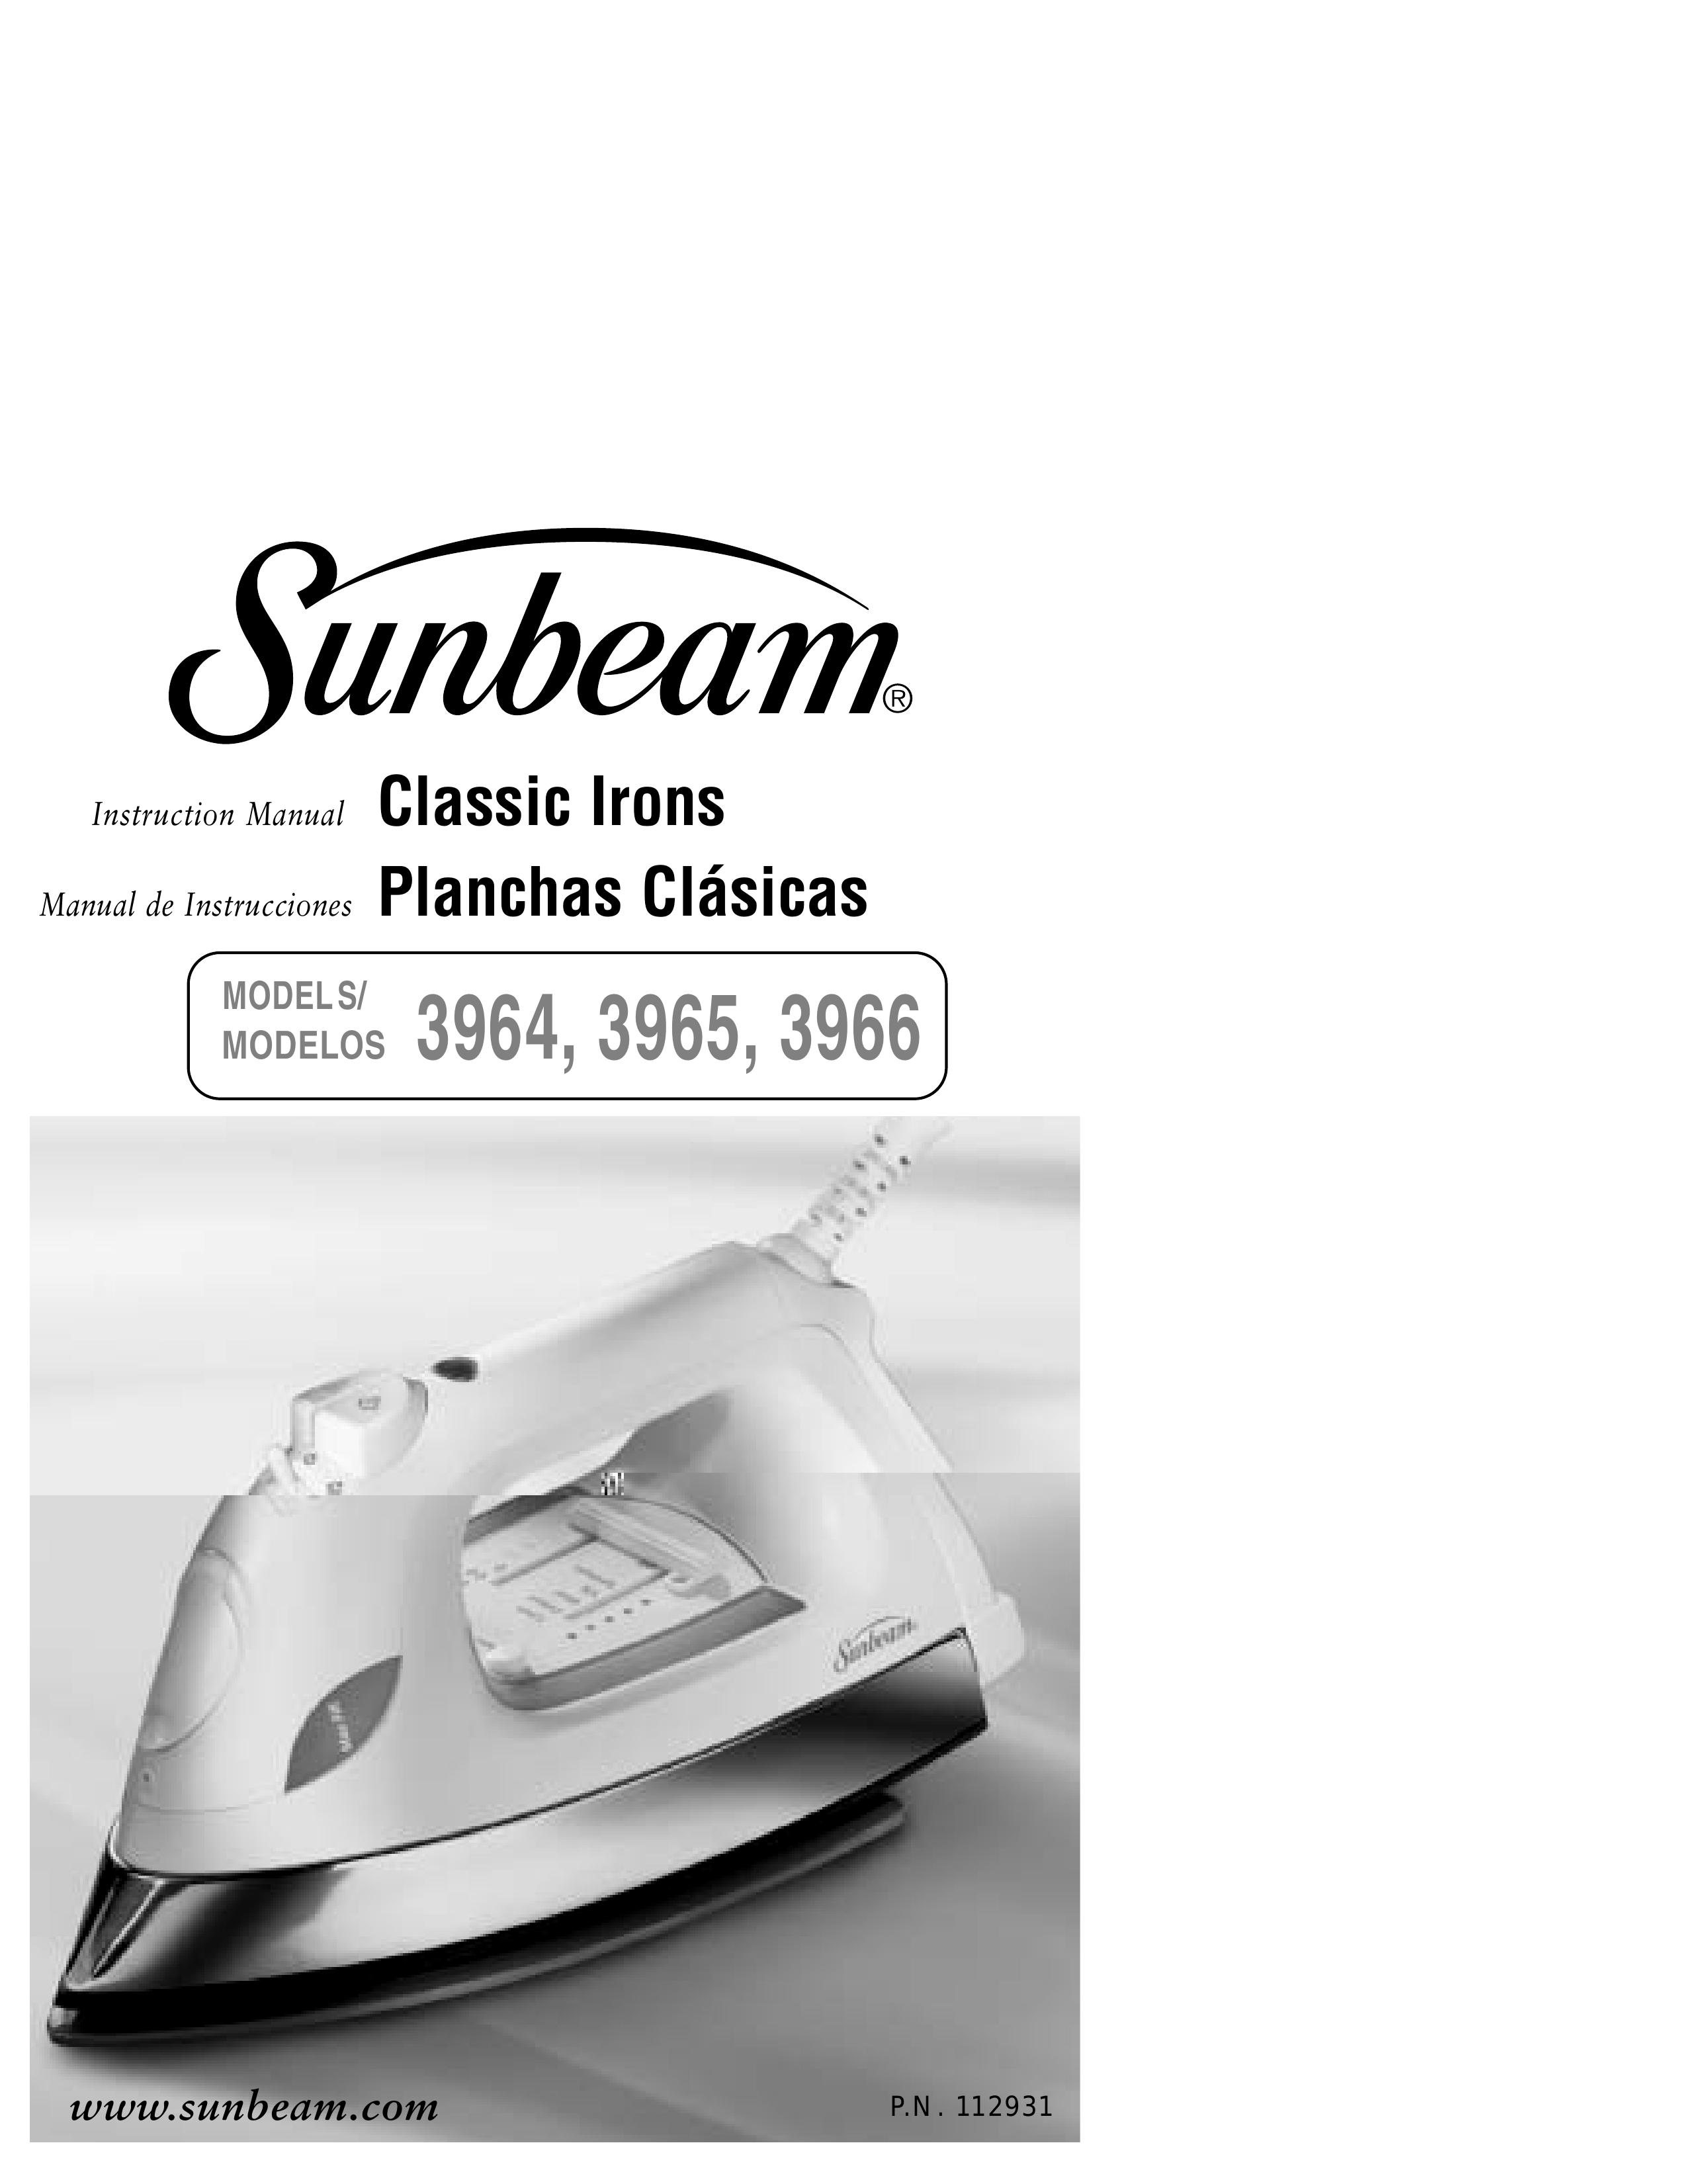 Sunbeam 3964 Iron User Manual